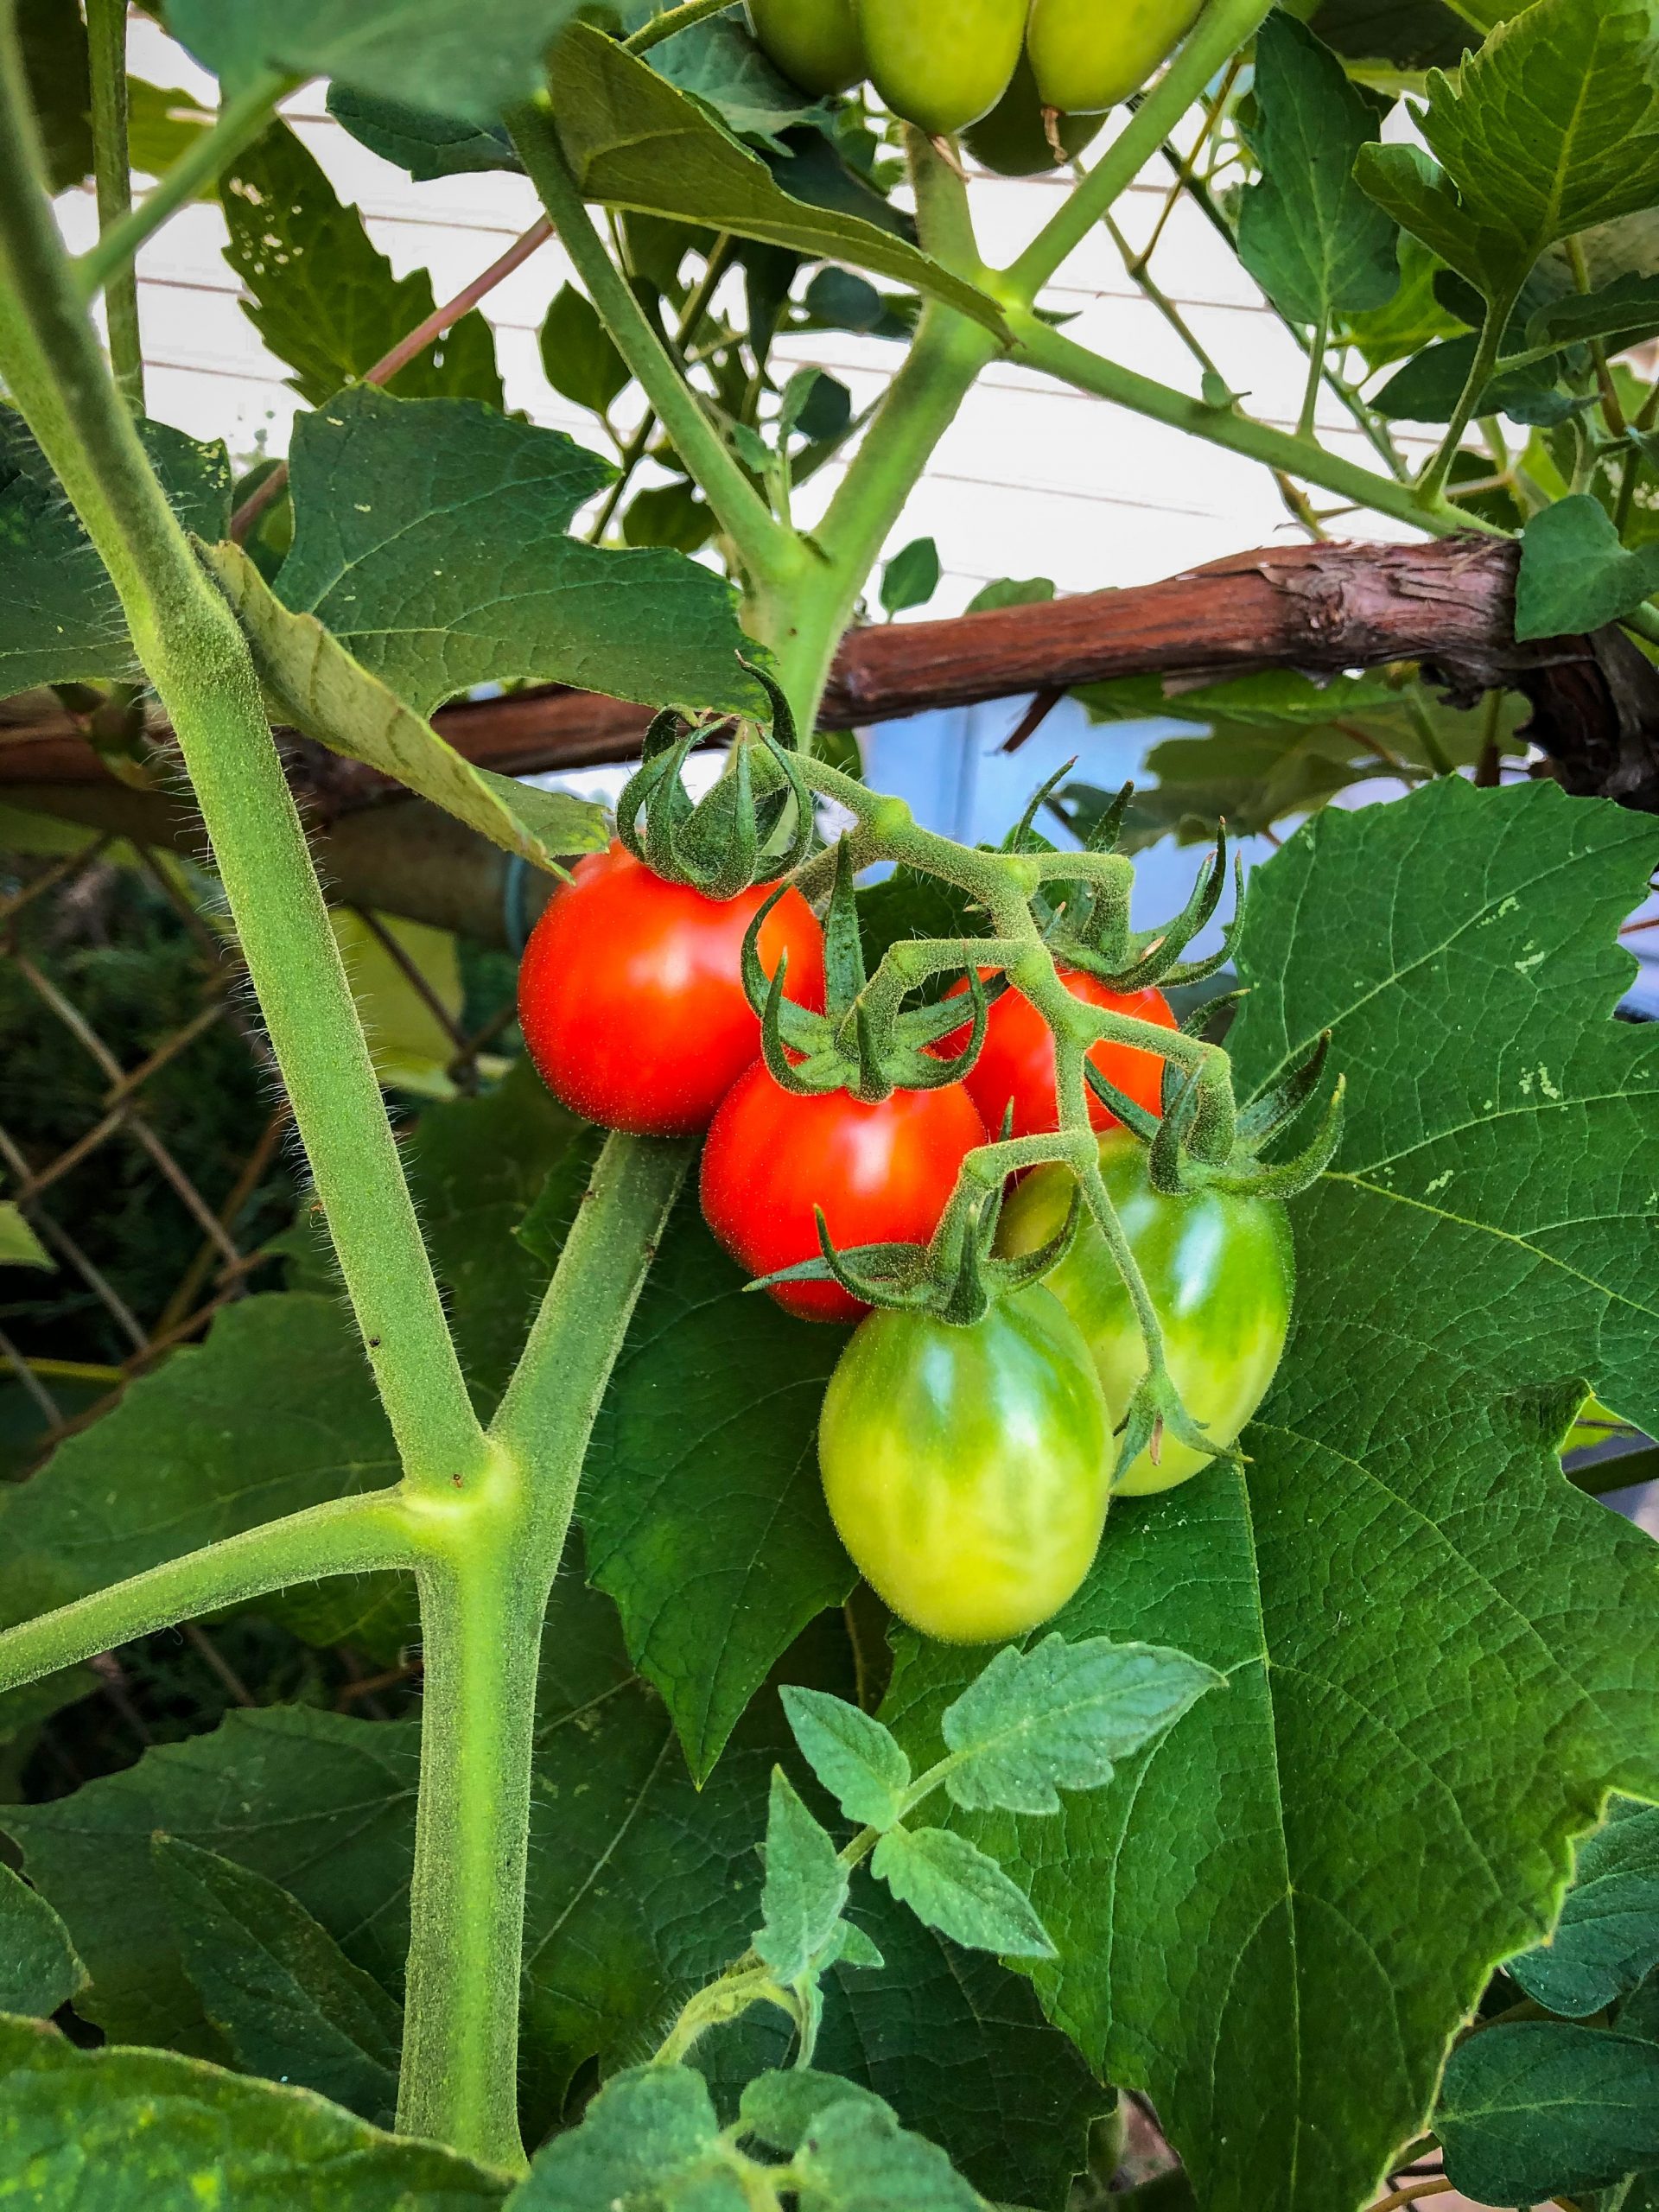 Do Tomato Seeds Need Light To Germinate?